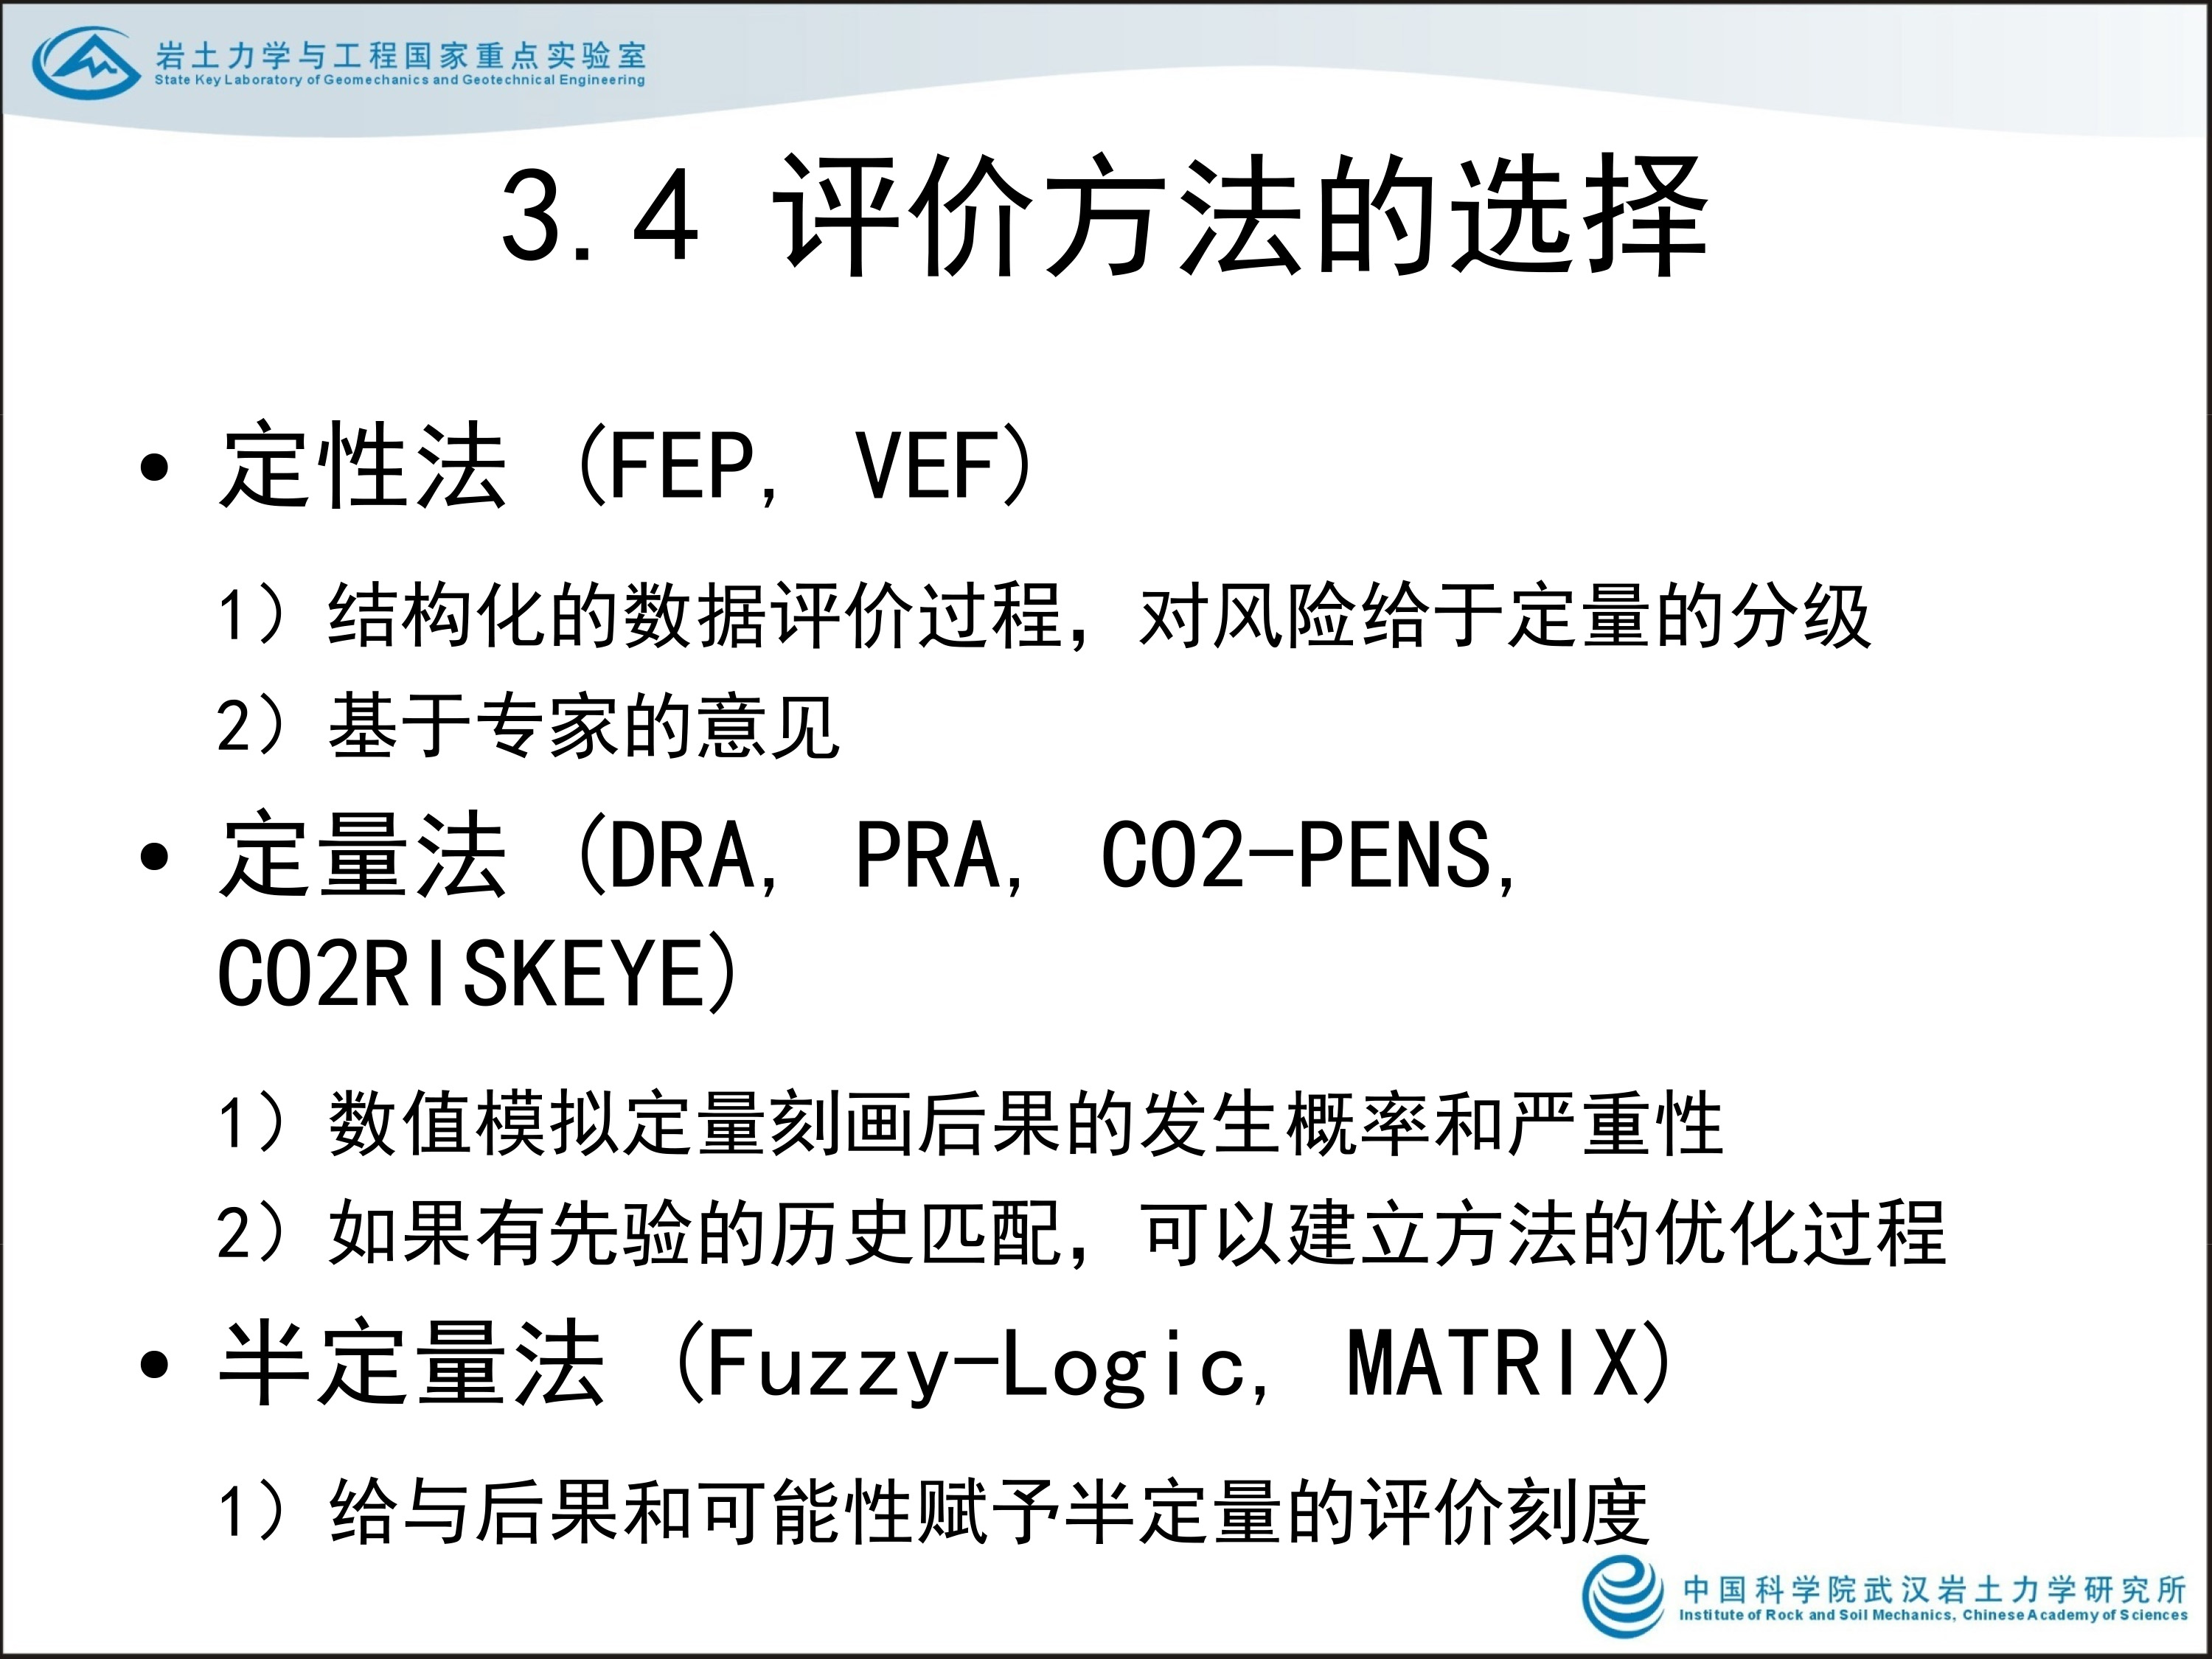 中国CCUS环境风险评估关键问题